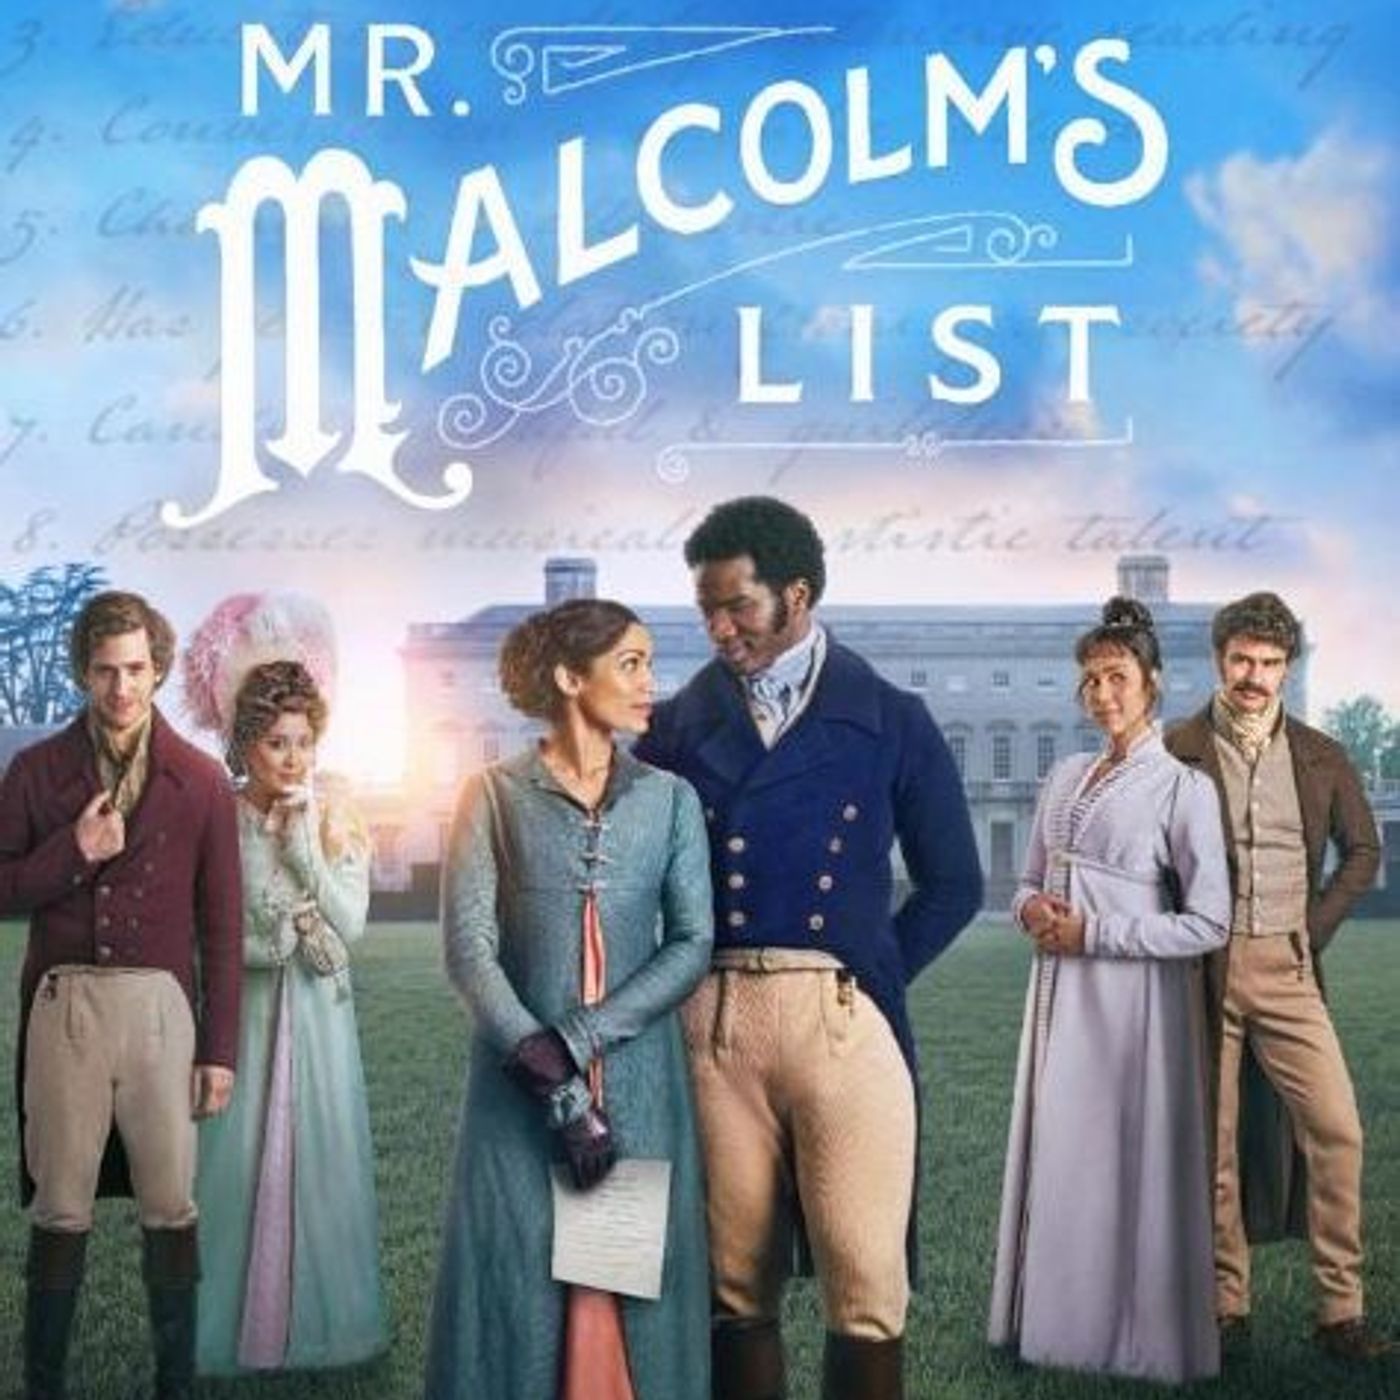 Episode 322: Emma Holly Jones & Amelia Warner On The Music Of Mr Malcolm's List